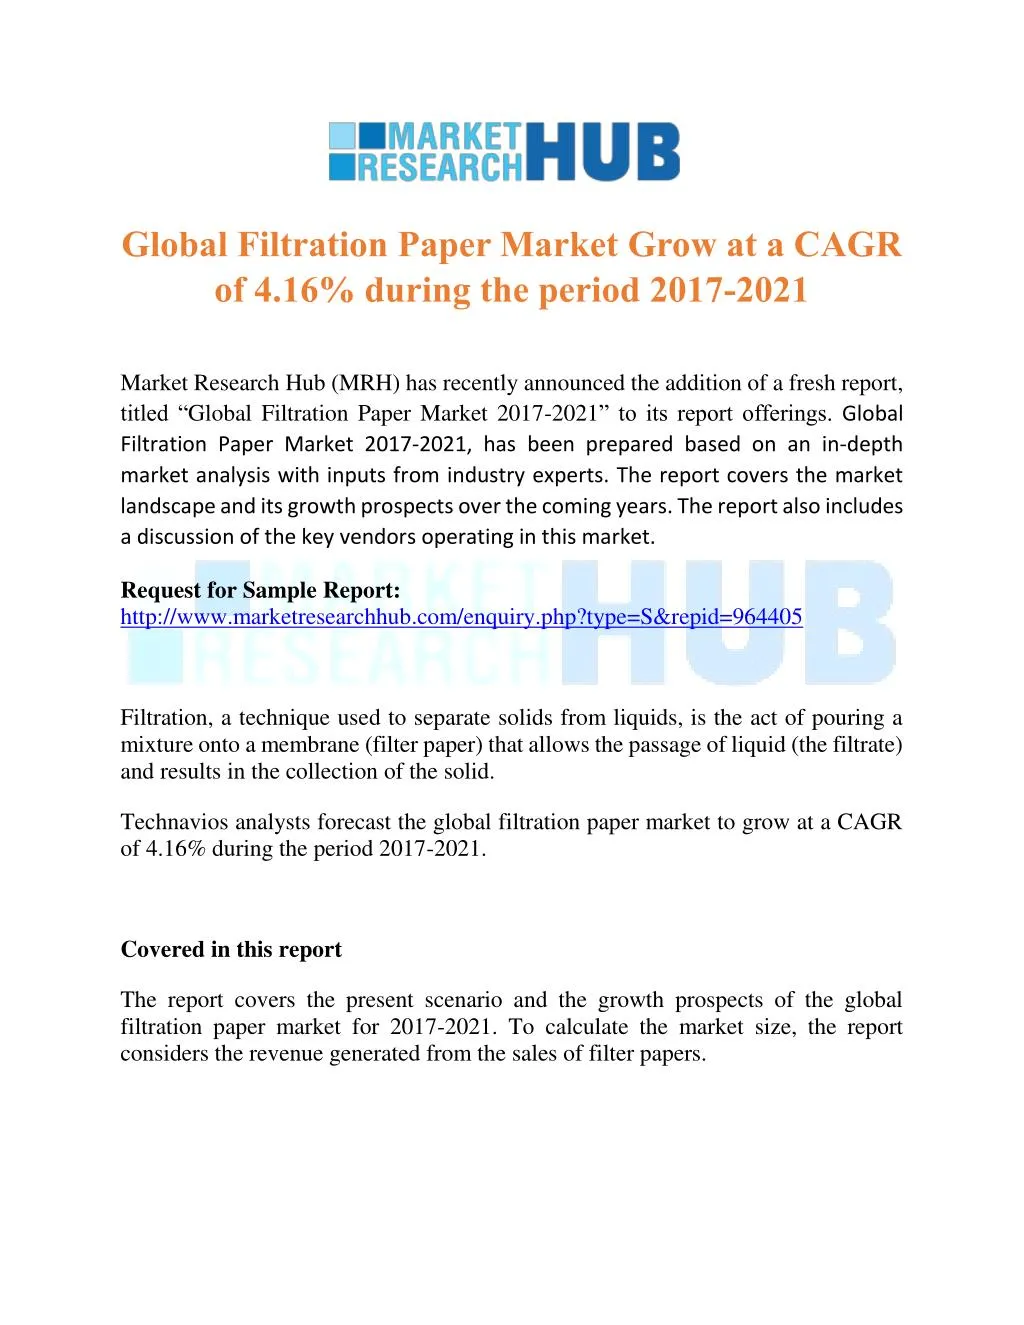 global filtration paper market grow at a cagr